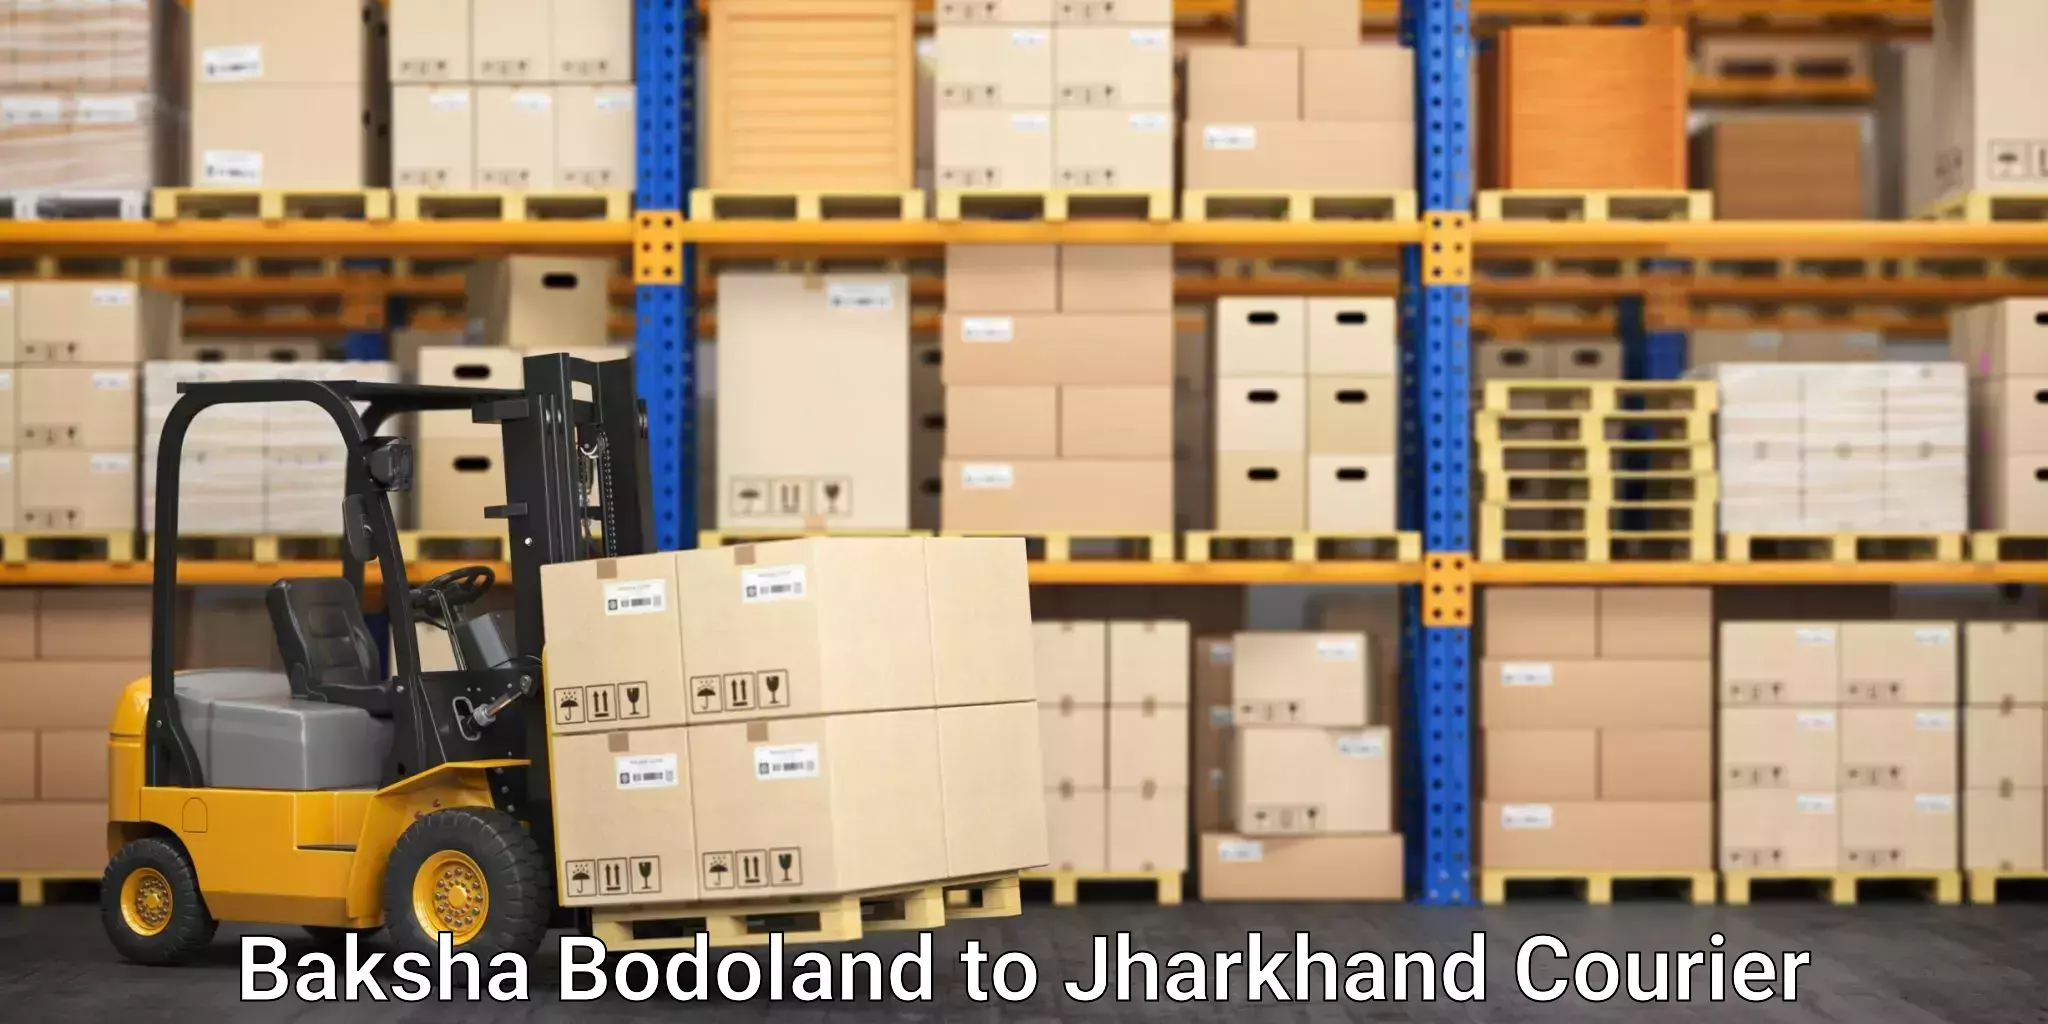 Speedy delivery service Baksha Bodoland to Jharkhand